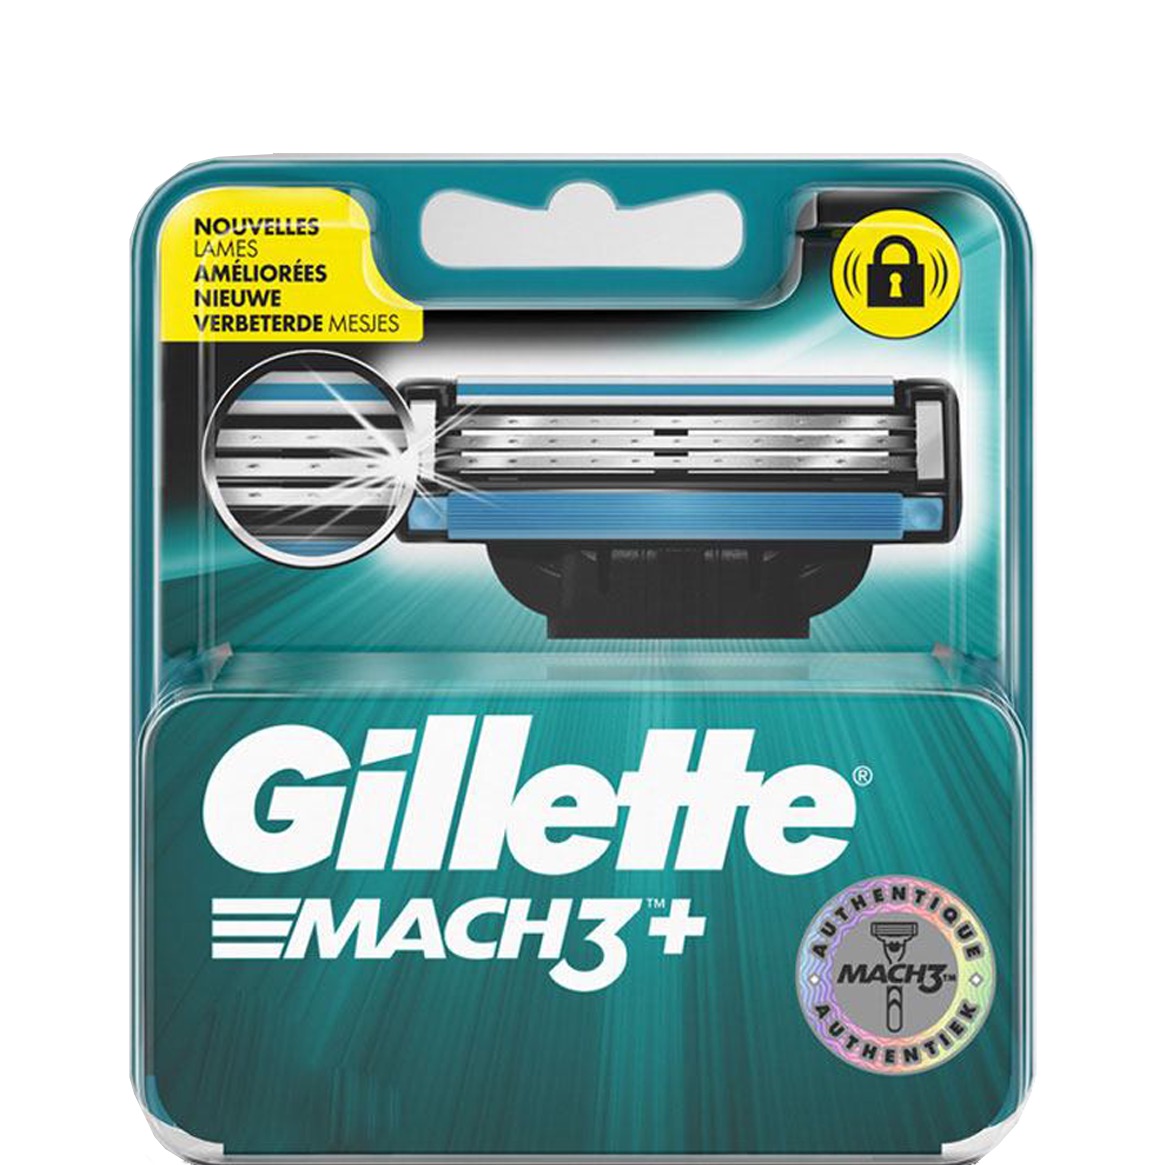 Gillette Mach3+ Scheermesjes - 8 stuks